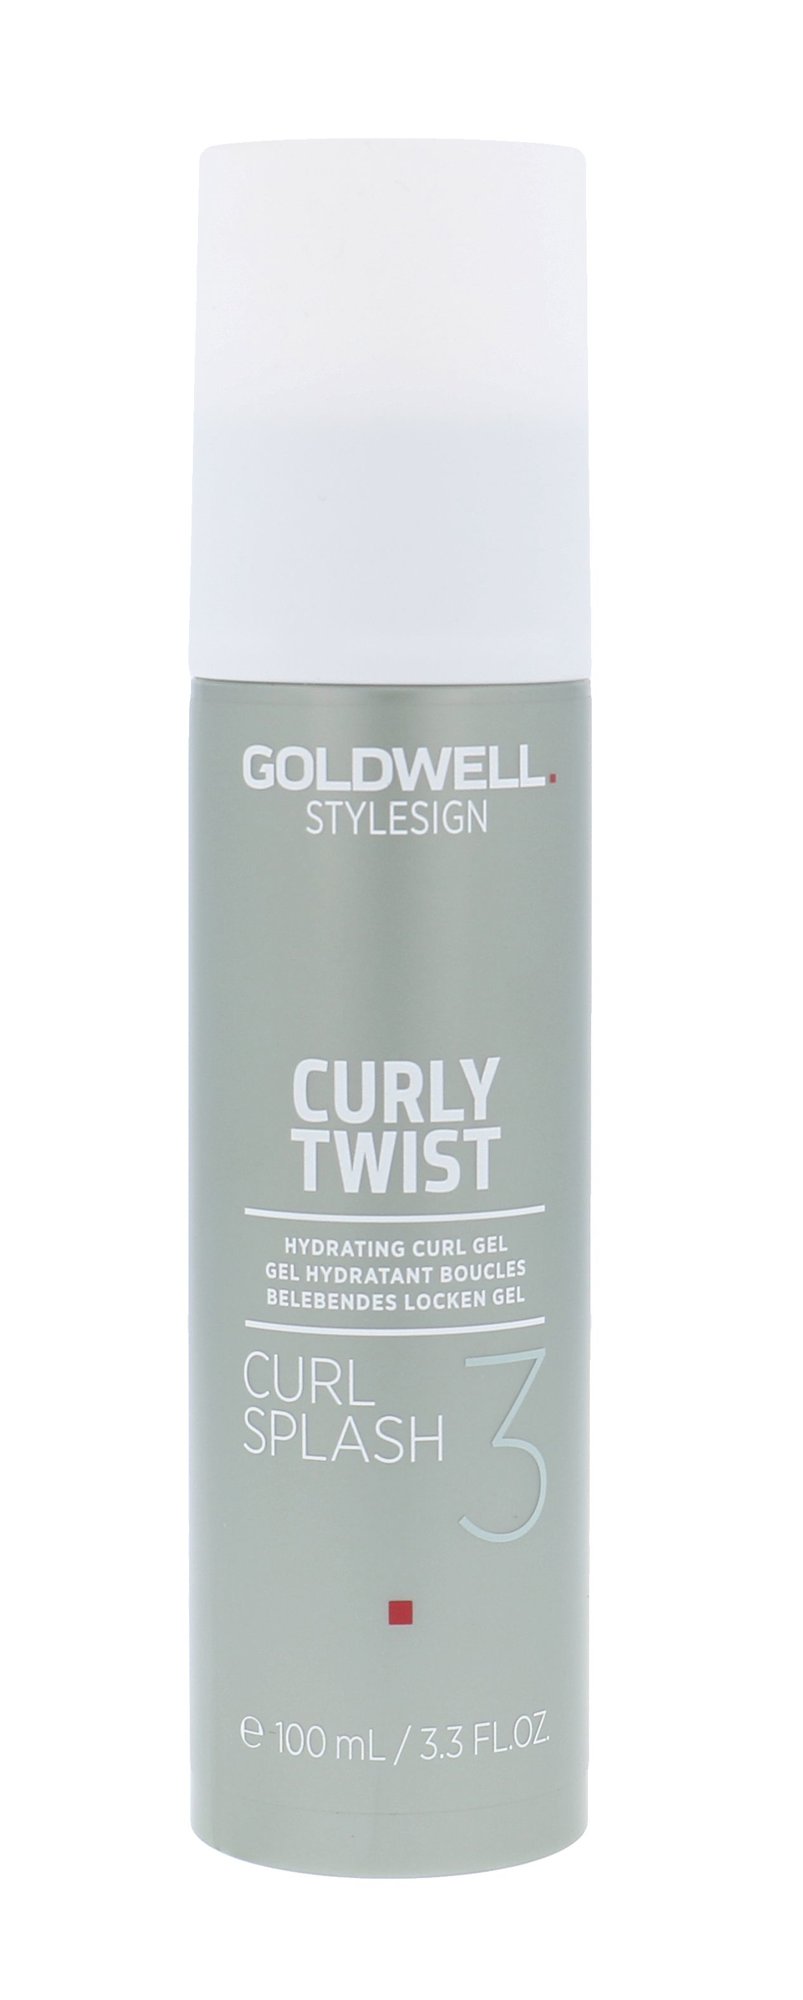 Goldwell Style Sign Curly Twist Curl Splash